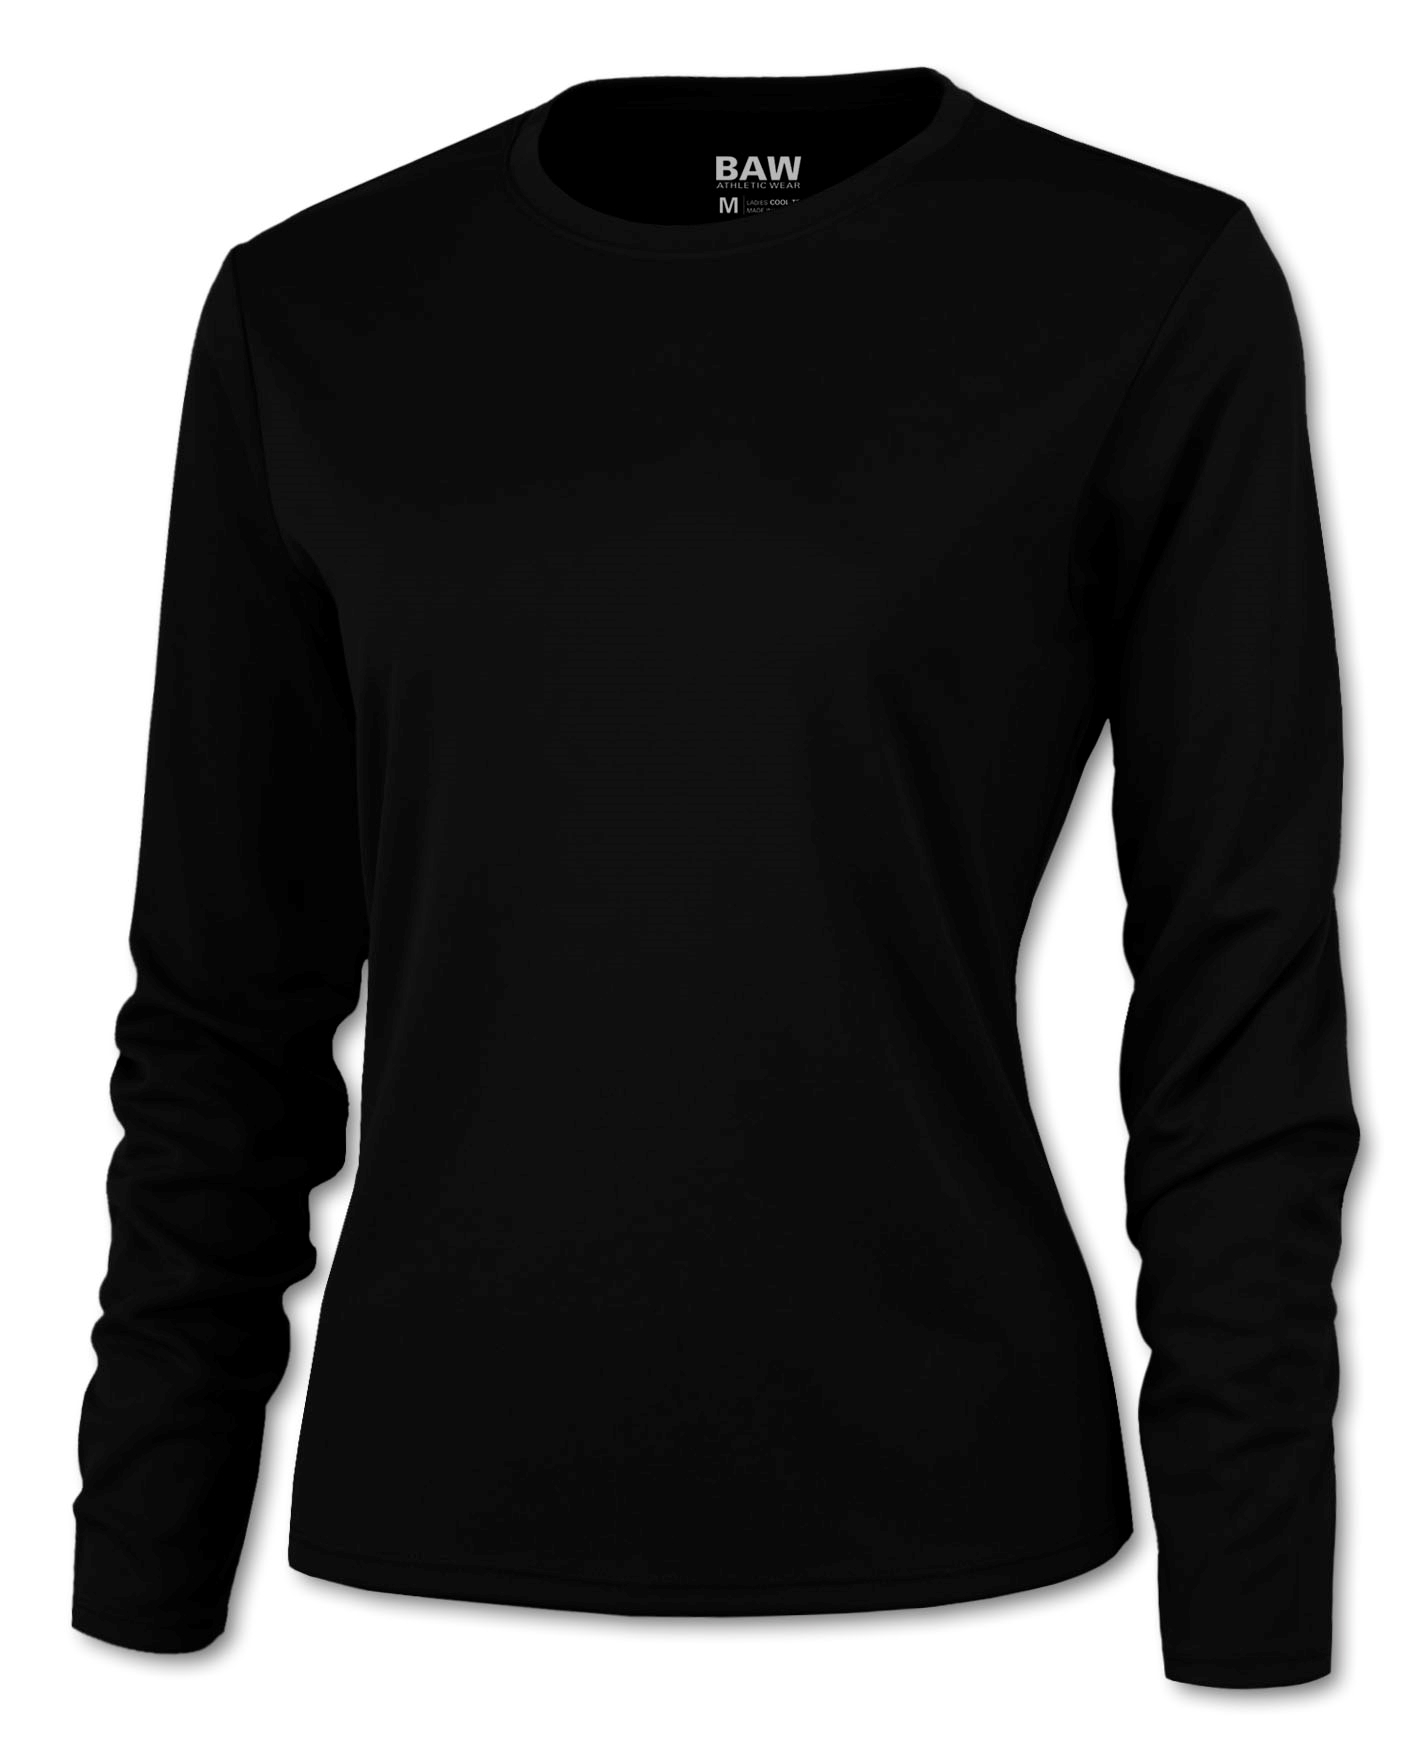 BAW Athletic Wear RC621 - Ladies Loose Fit Cool-tek Long Sleeve T-Shirt